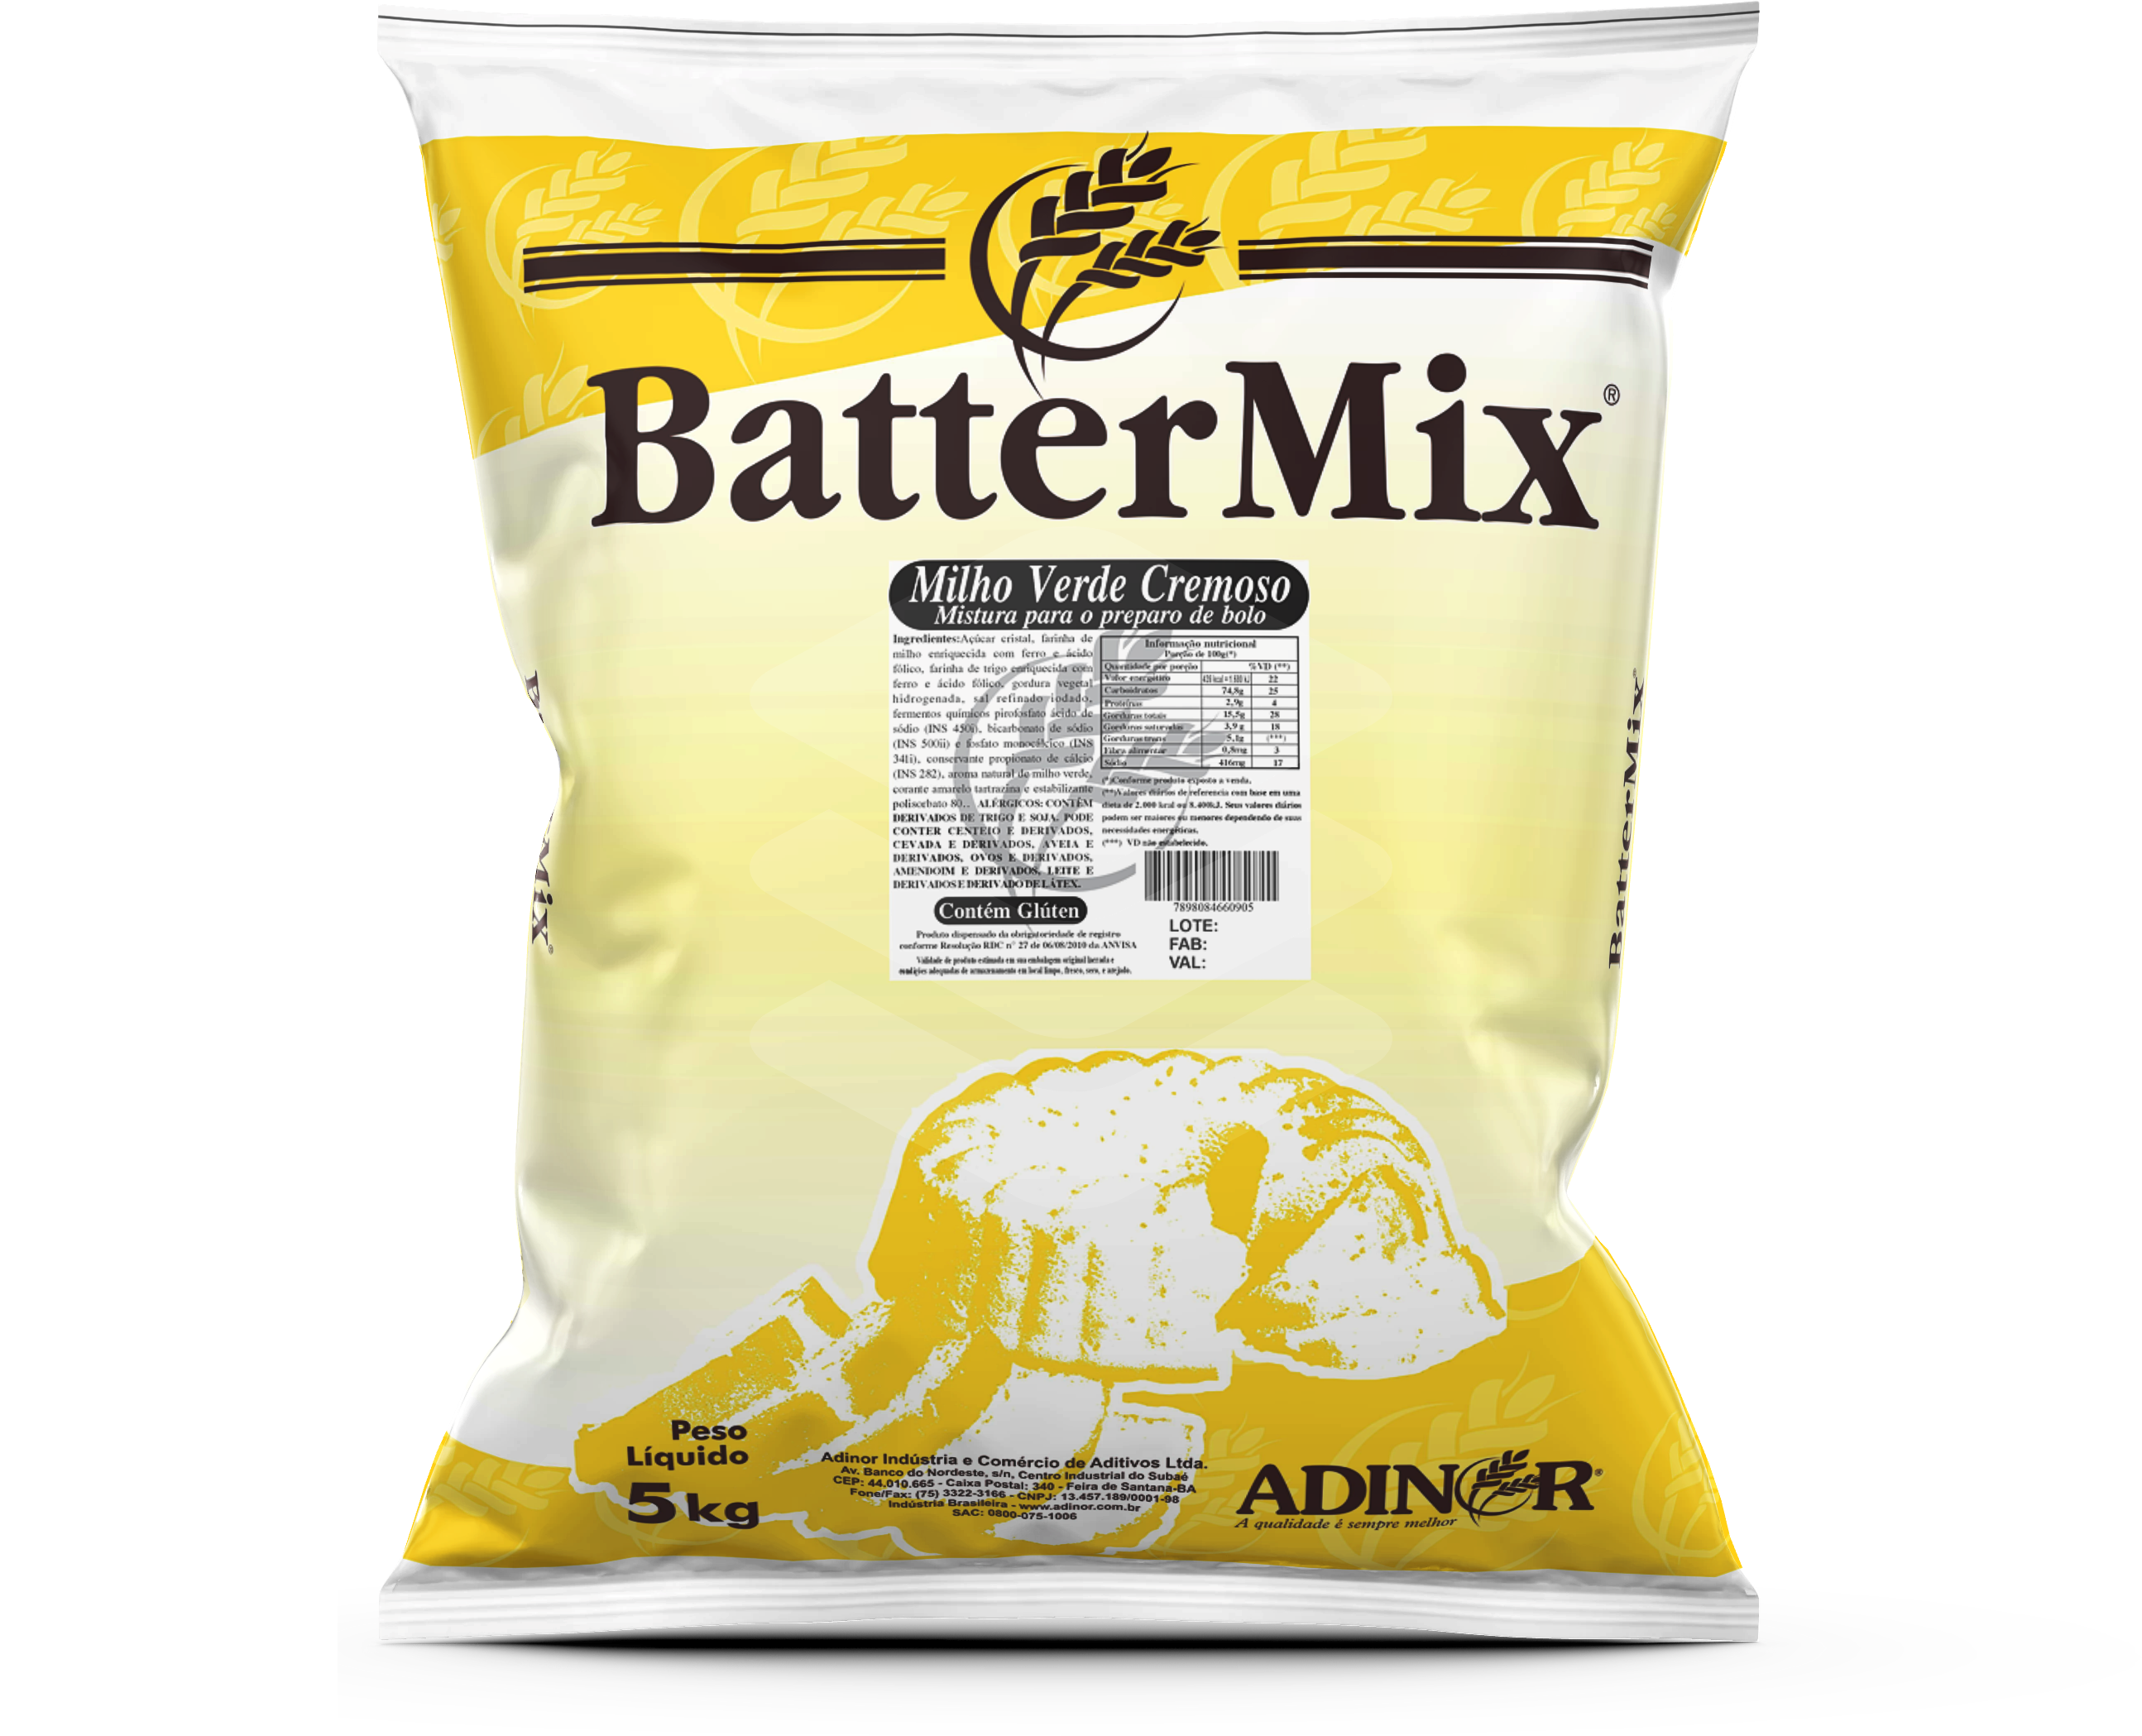 Battermix Milho Verde Cremoso